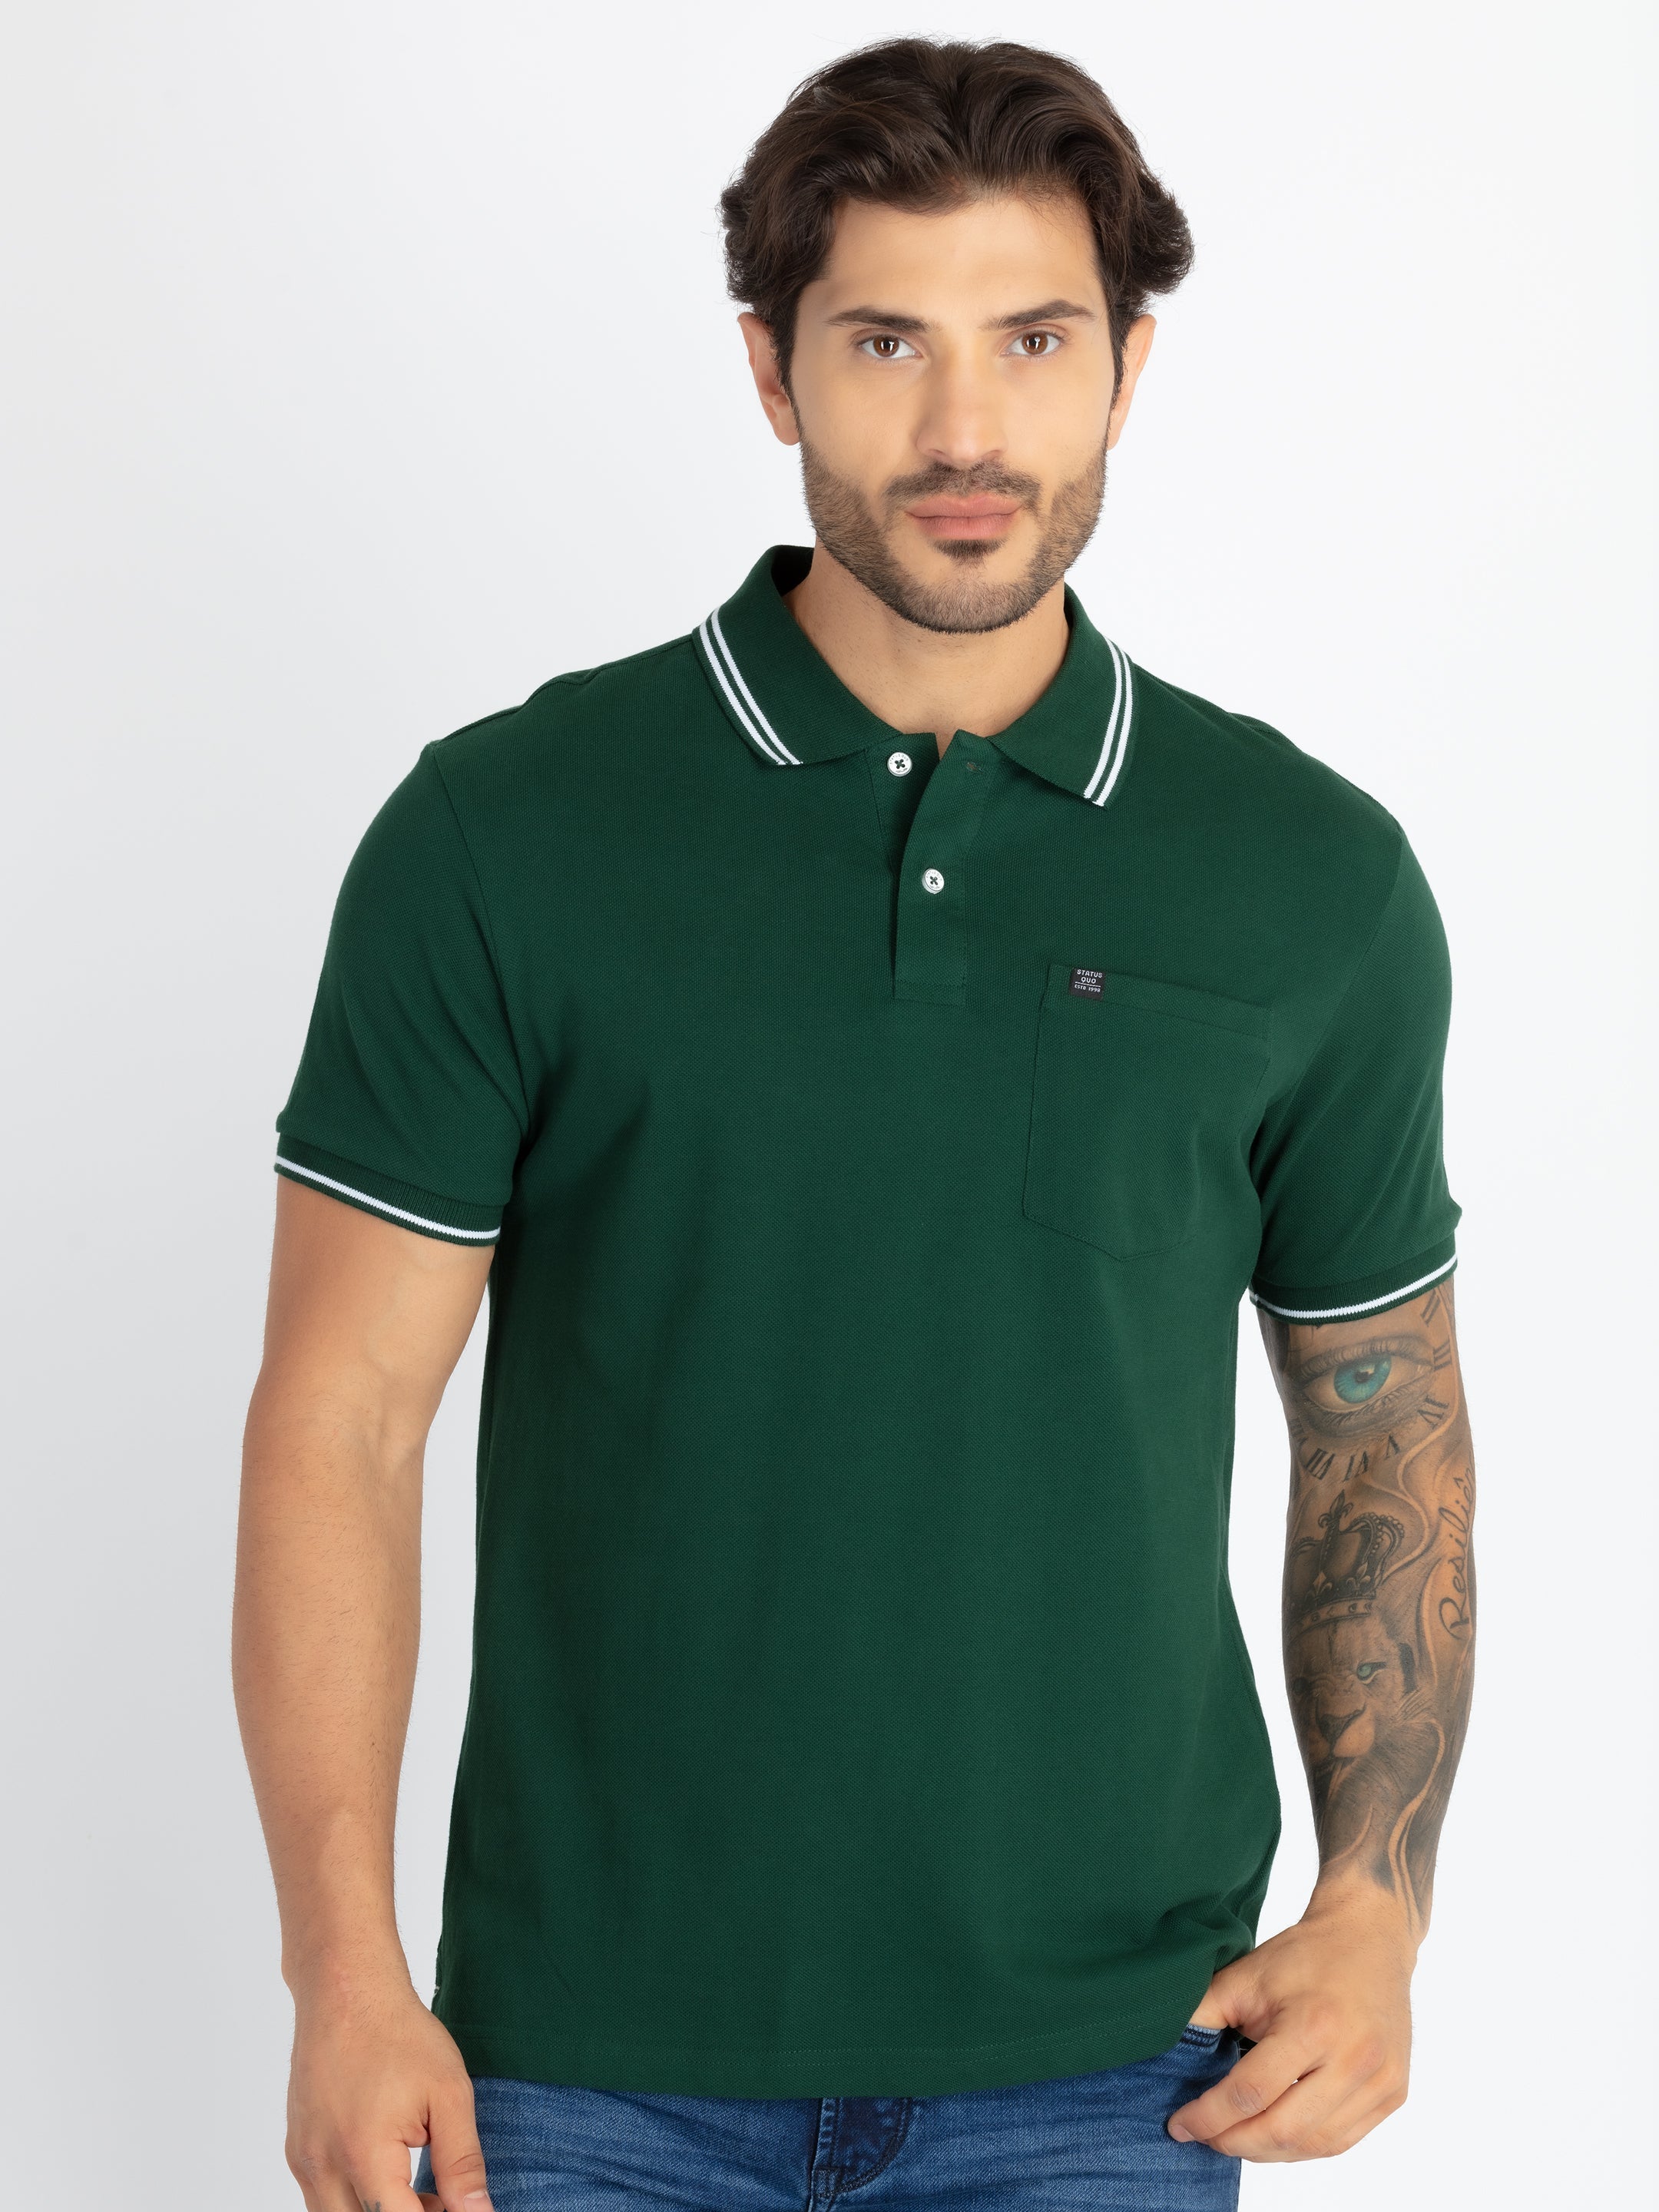 Status Quo |Men's Polo T-shirt - S, M, L, XL, XXL